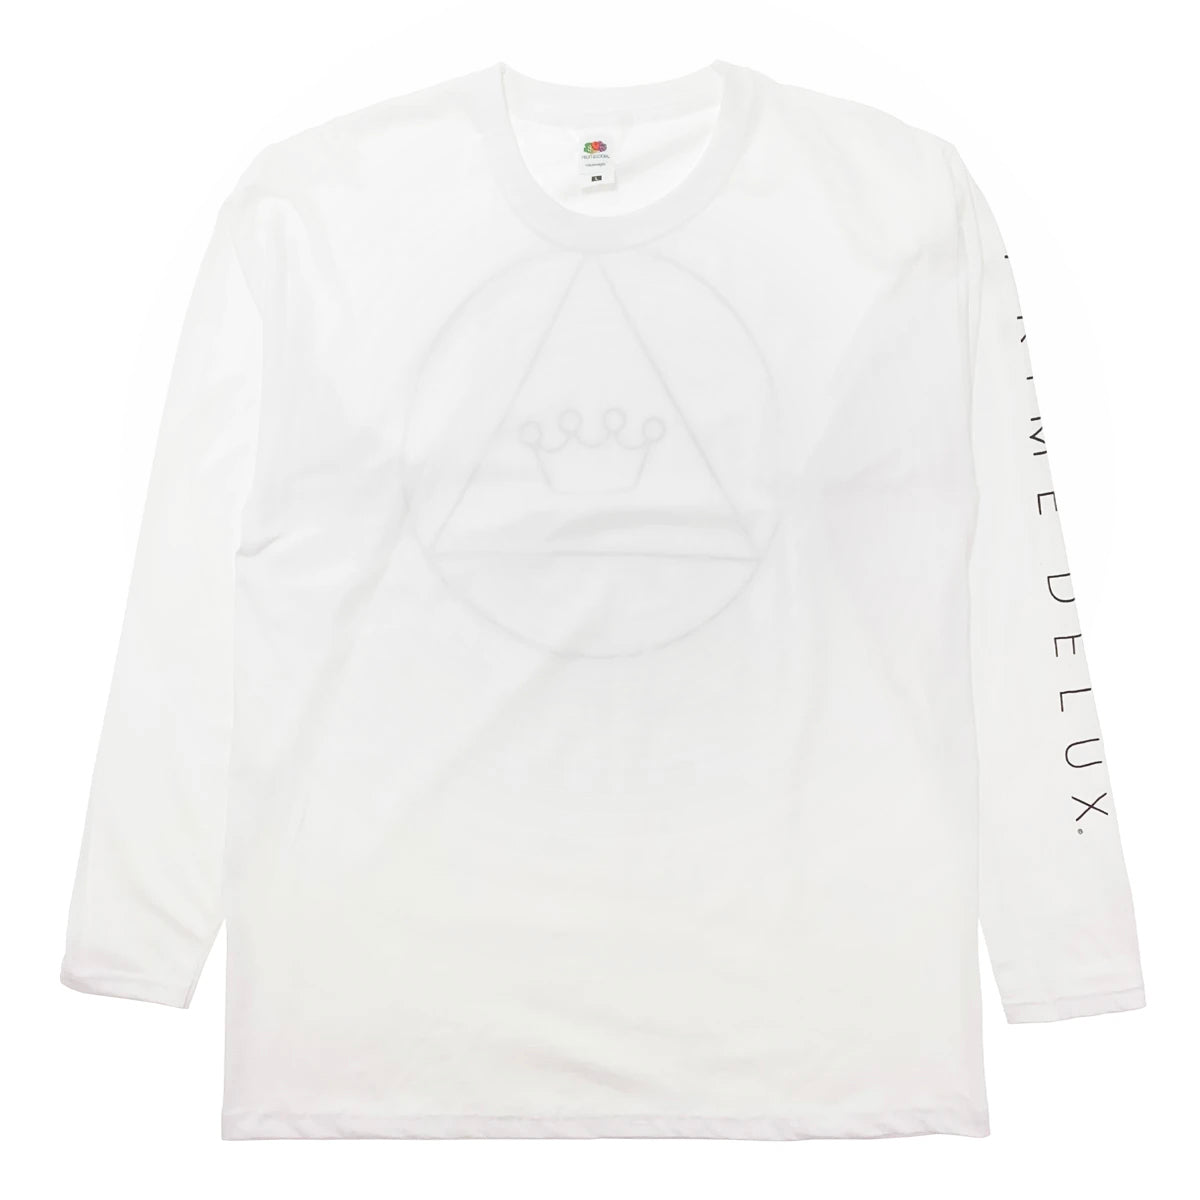 Prime Delux Unity Long Sleeve T Shirt - White / Black - Prime Delux Store